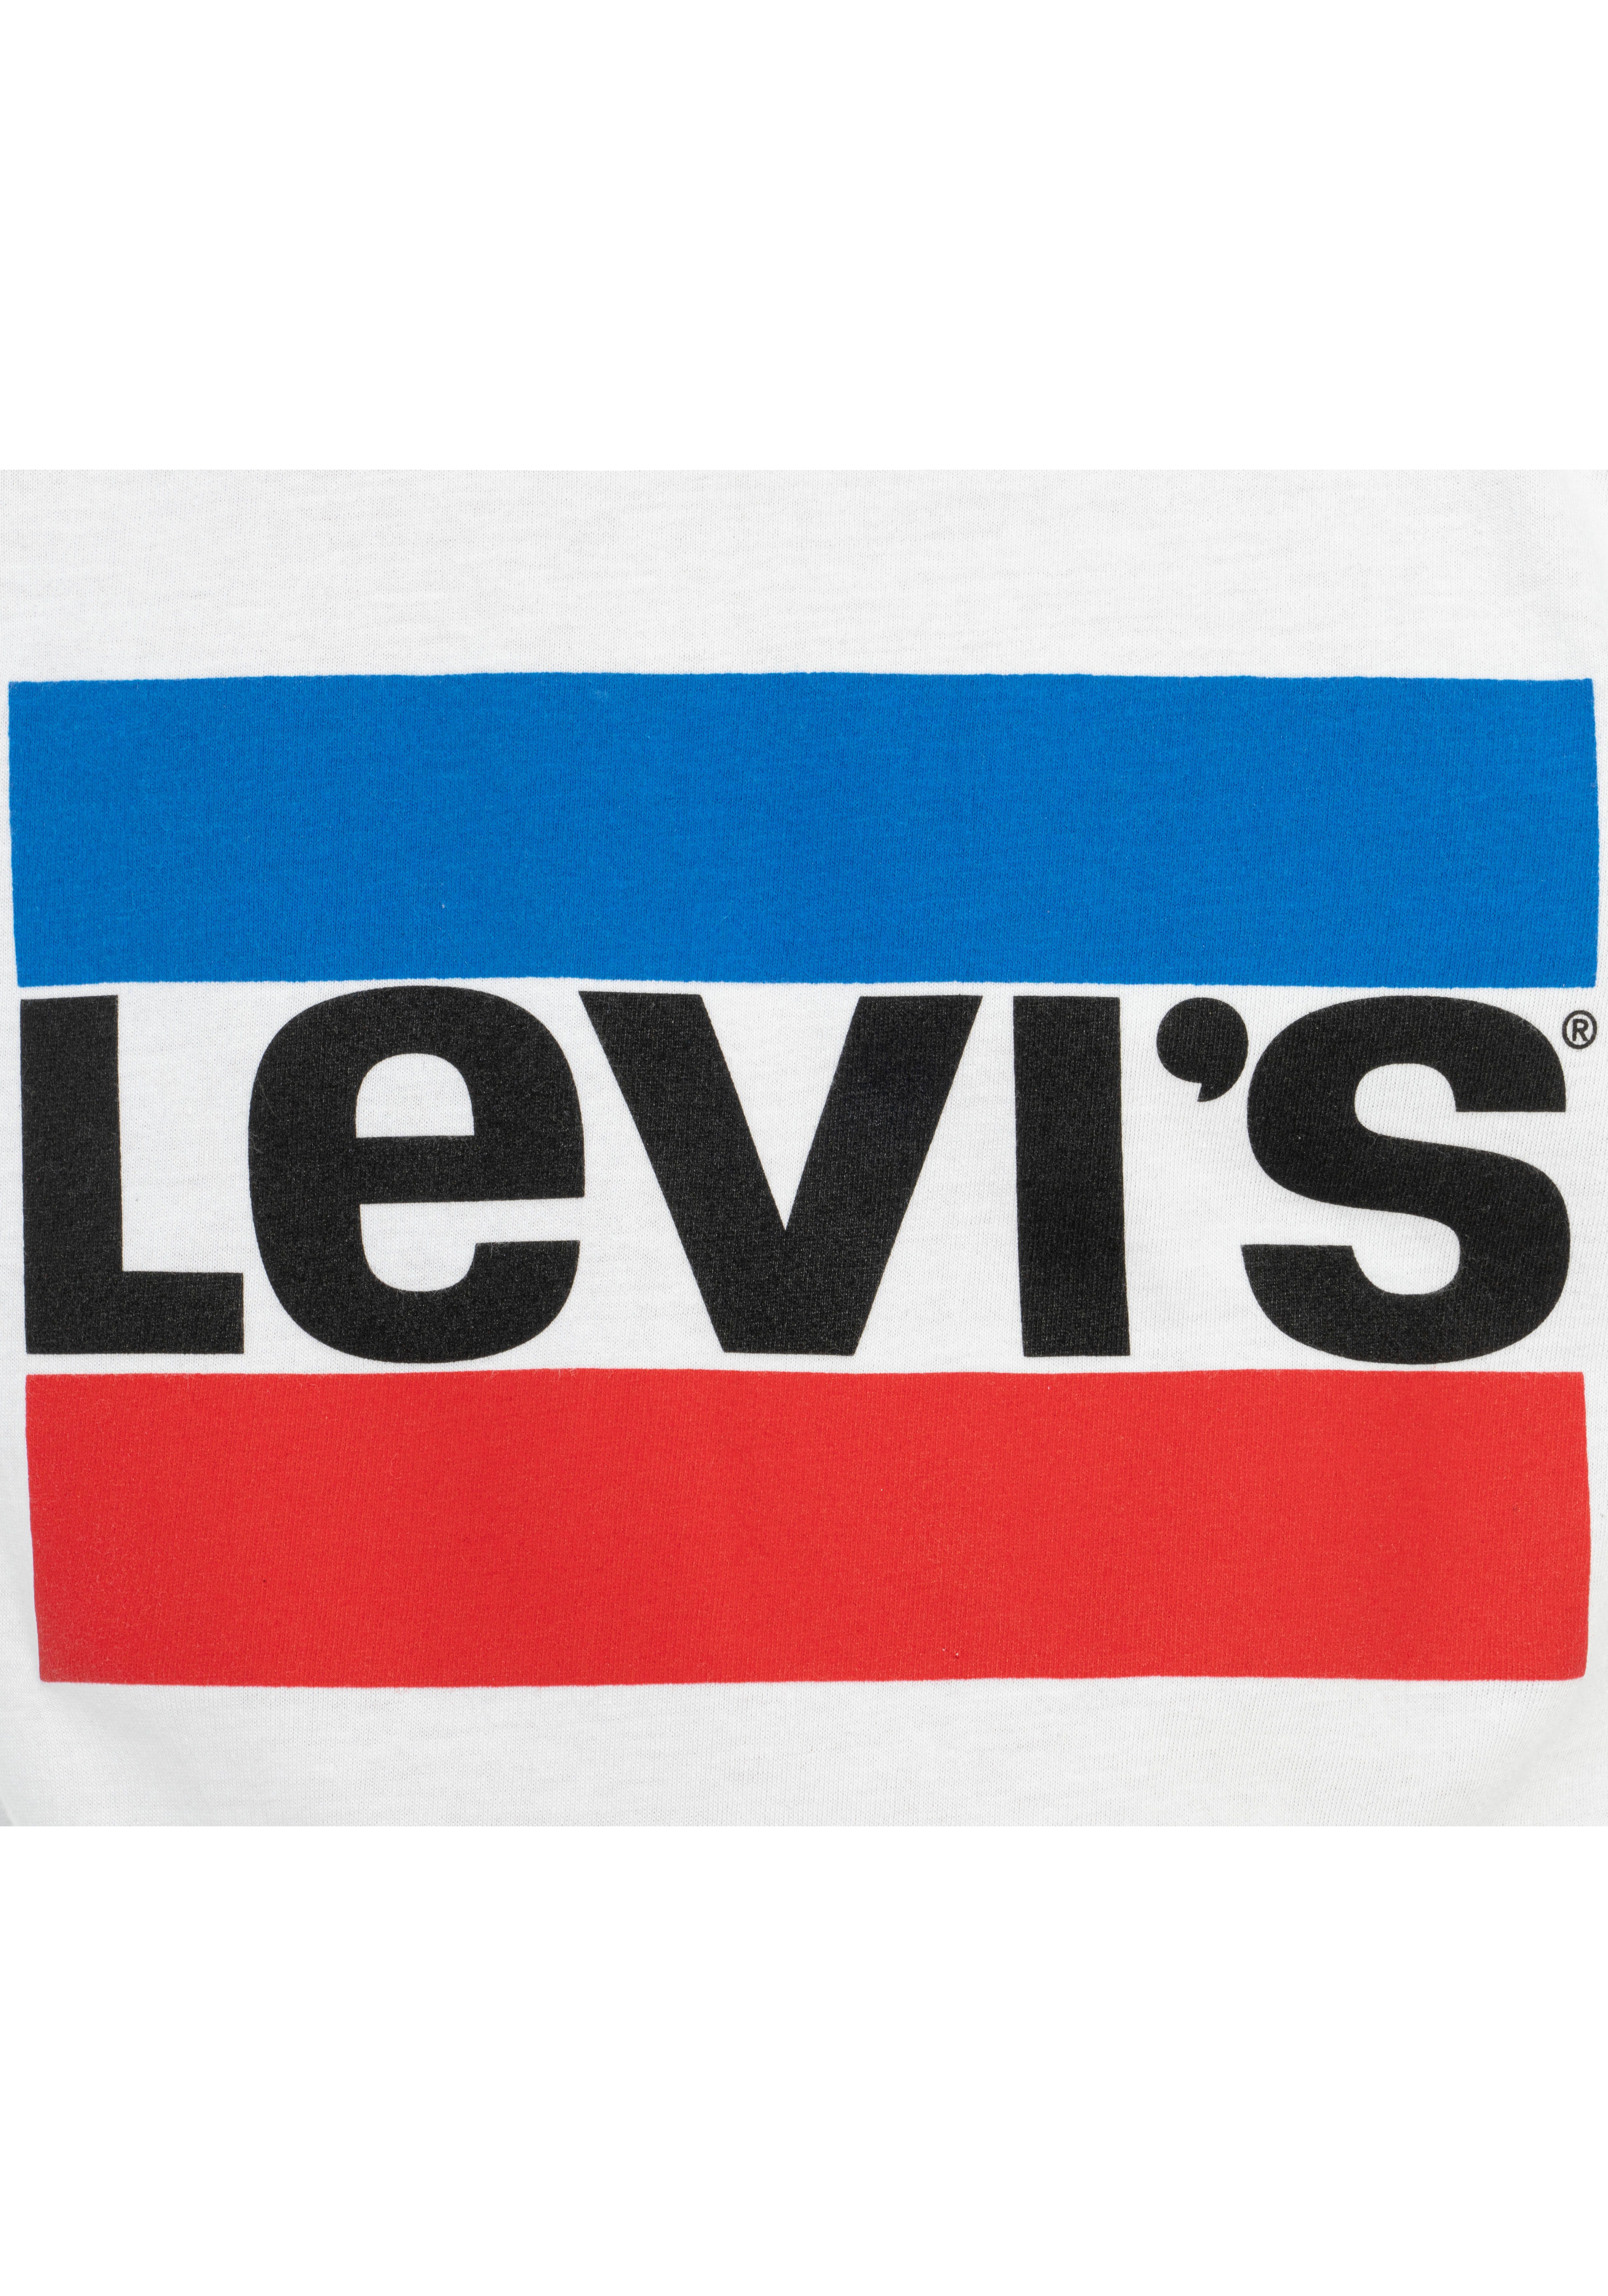 TEE Levi's® SPORTSWEAR white BOYS Kids for T-Shirt LOGO